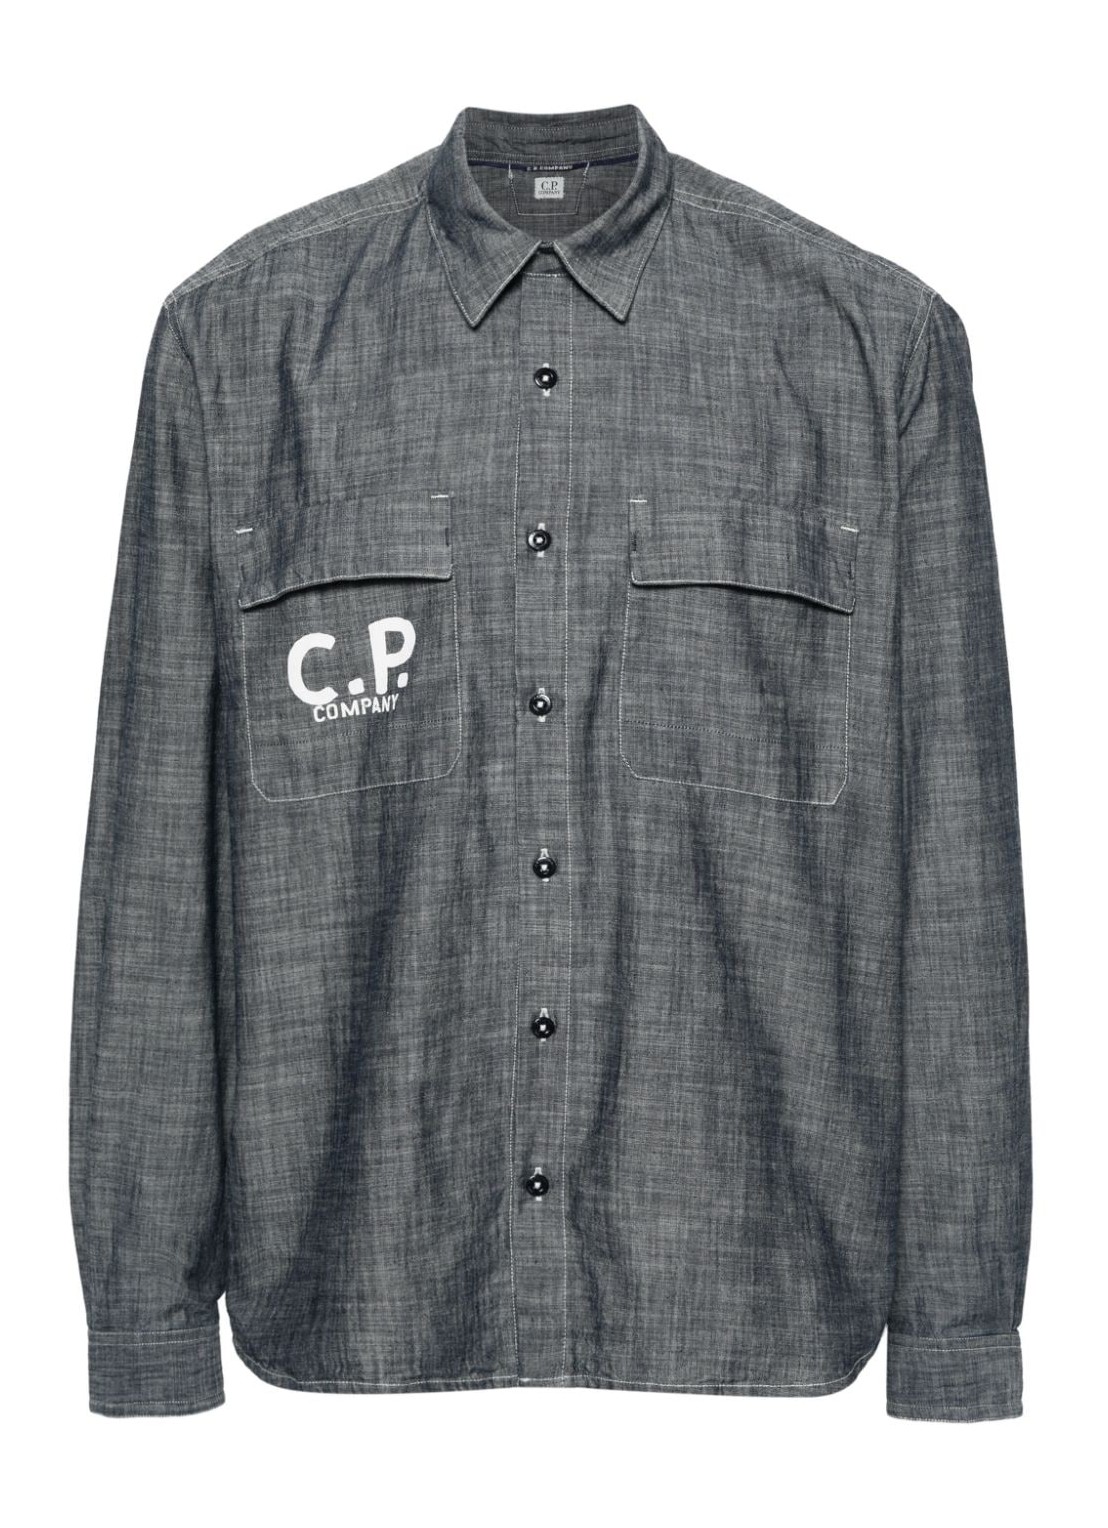 Camiseria c.p.company shirt manchambray long sleeved logo shirt - 16cmsh150a110065w d08 talla L
 